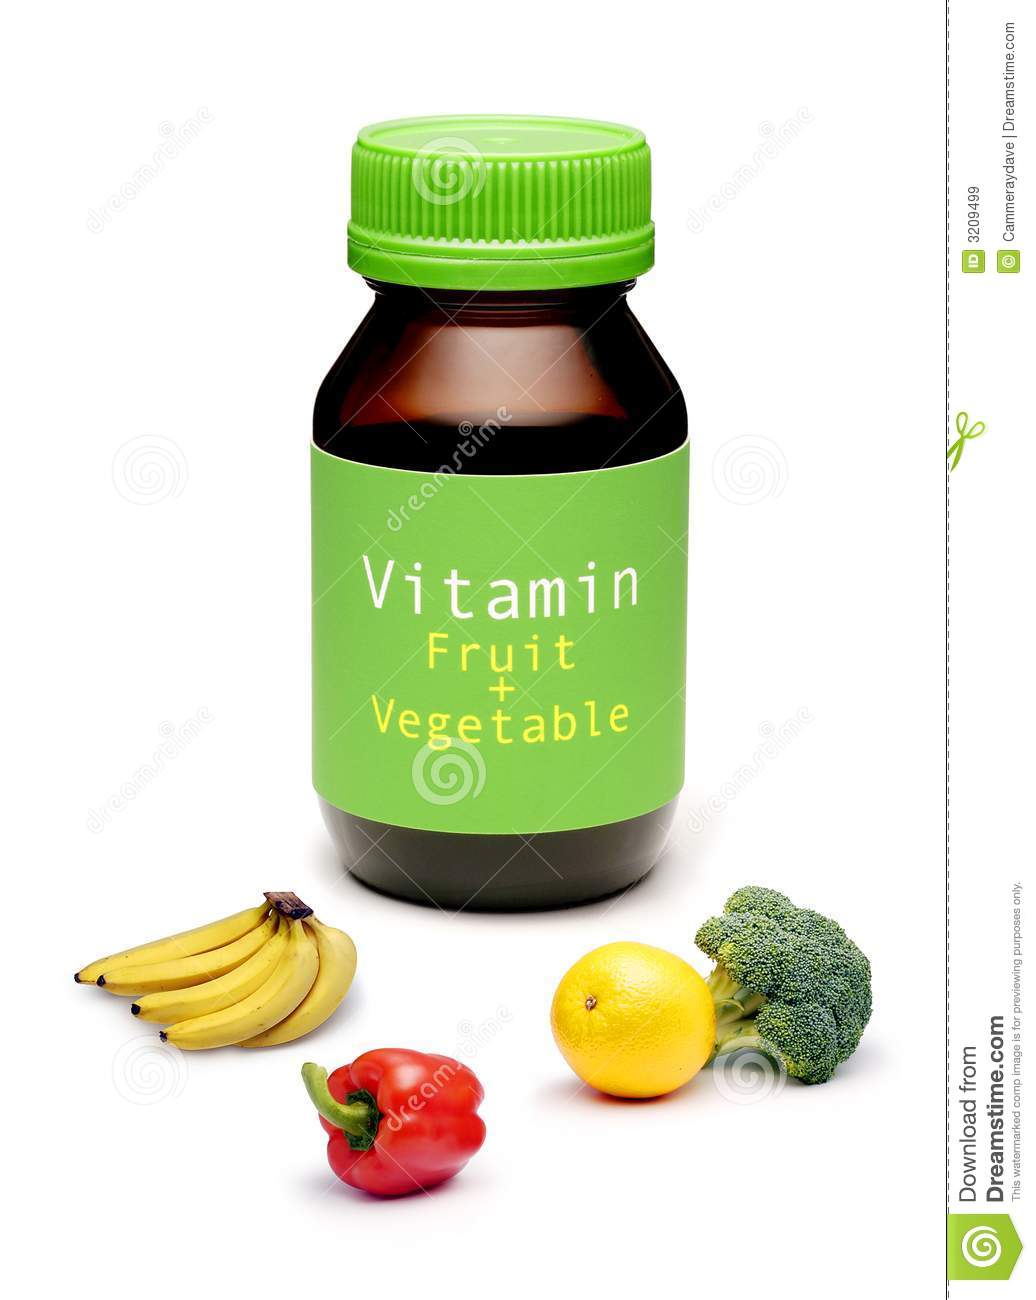 Vitamin Bottle Fruit Vegetables Royalty Free Stock Images   Image